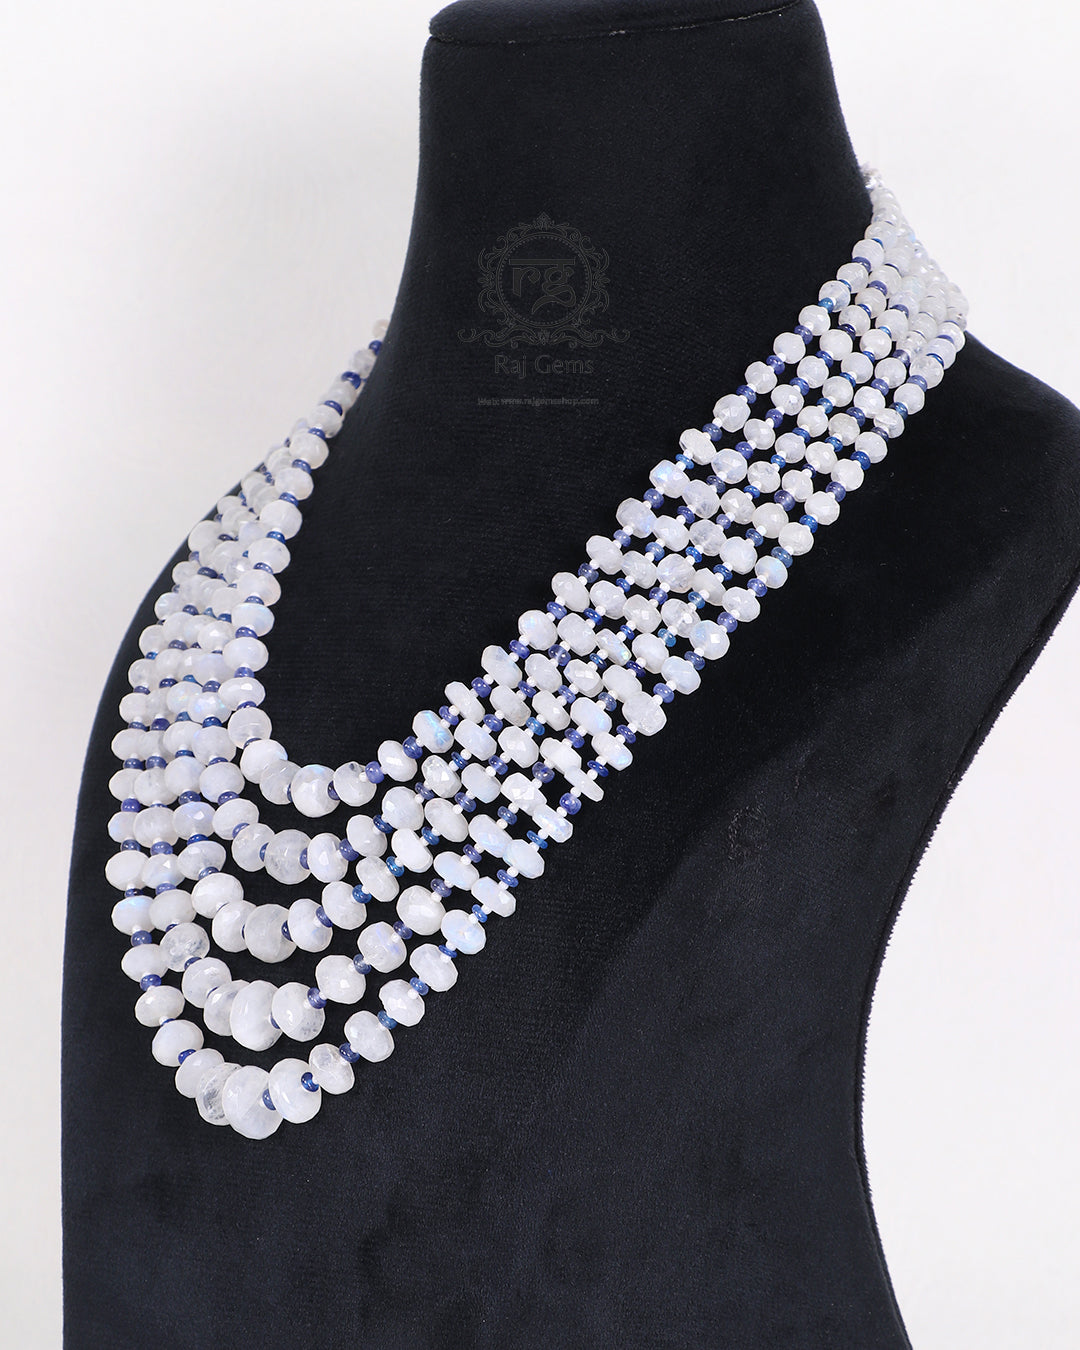 Natural Rainbow Moonstone & Blue Sapphire Gemstone Beads Necklace Jewelry